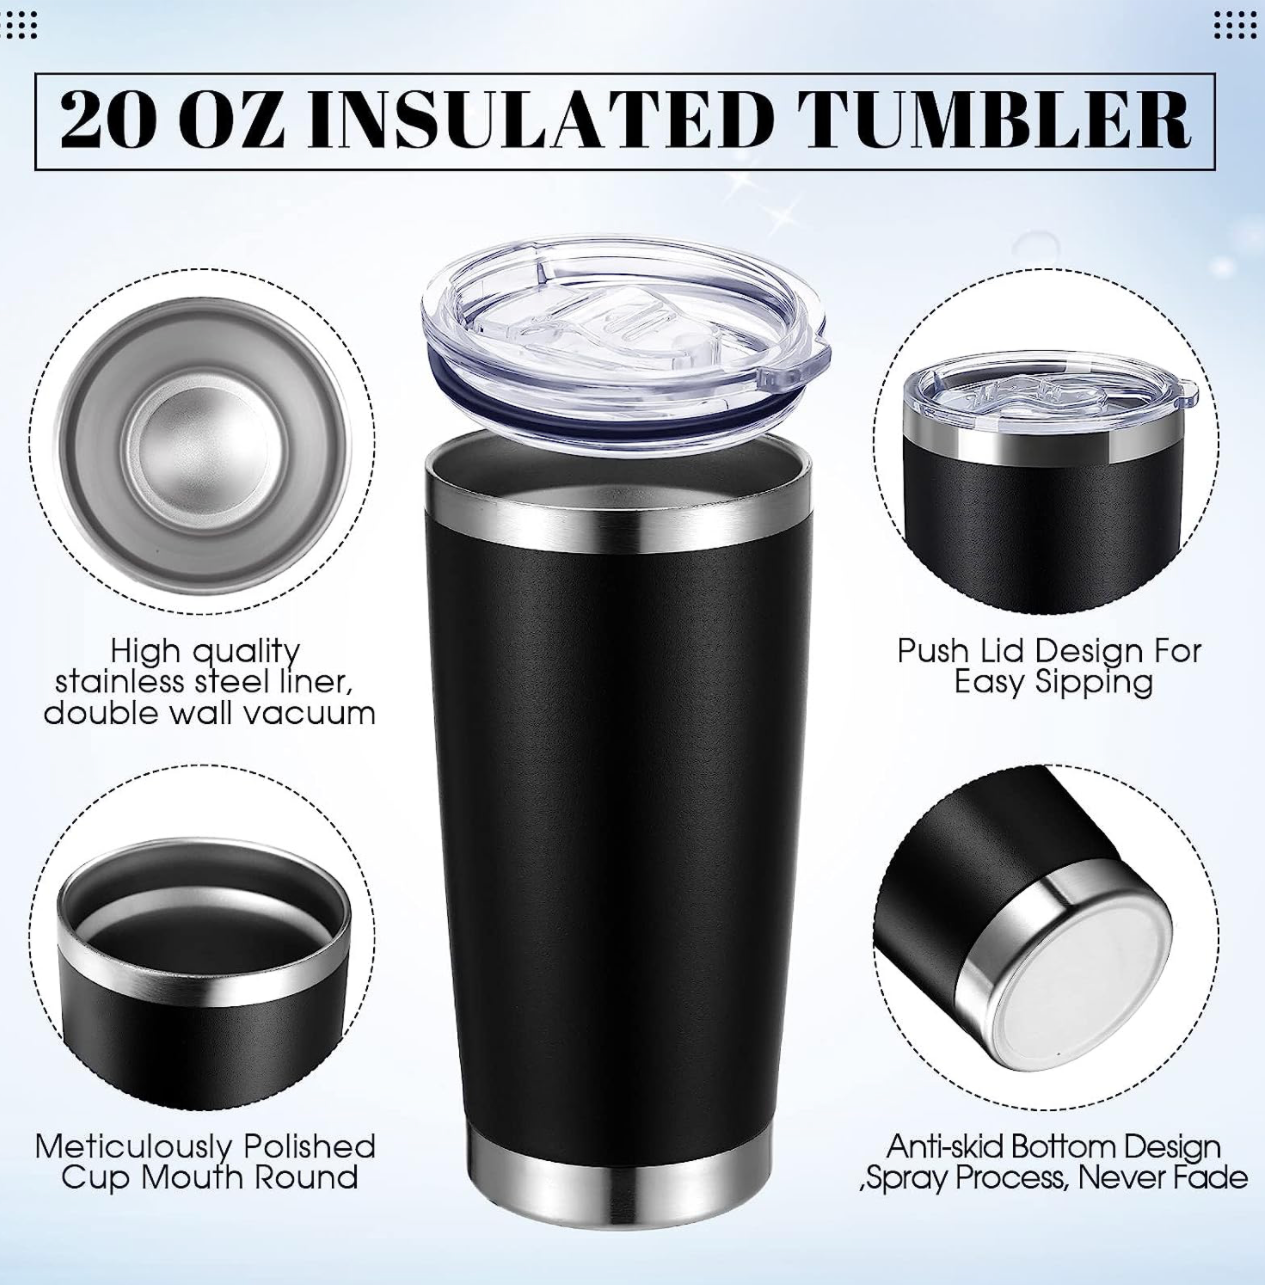 Custom Engraving Studio, LLC: Beast 20 oz Insulated Tumbler